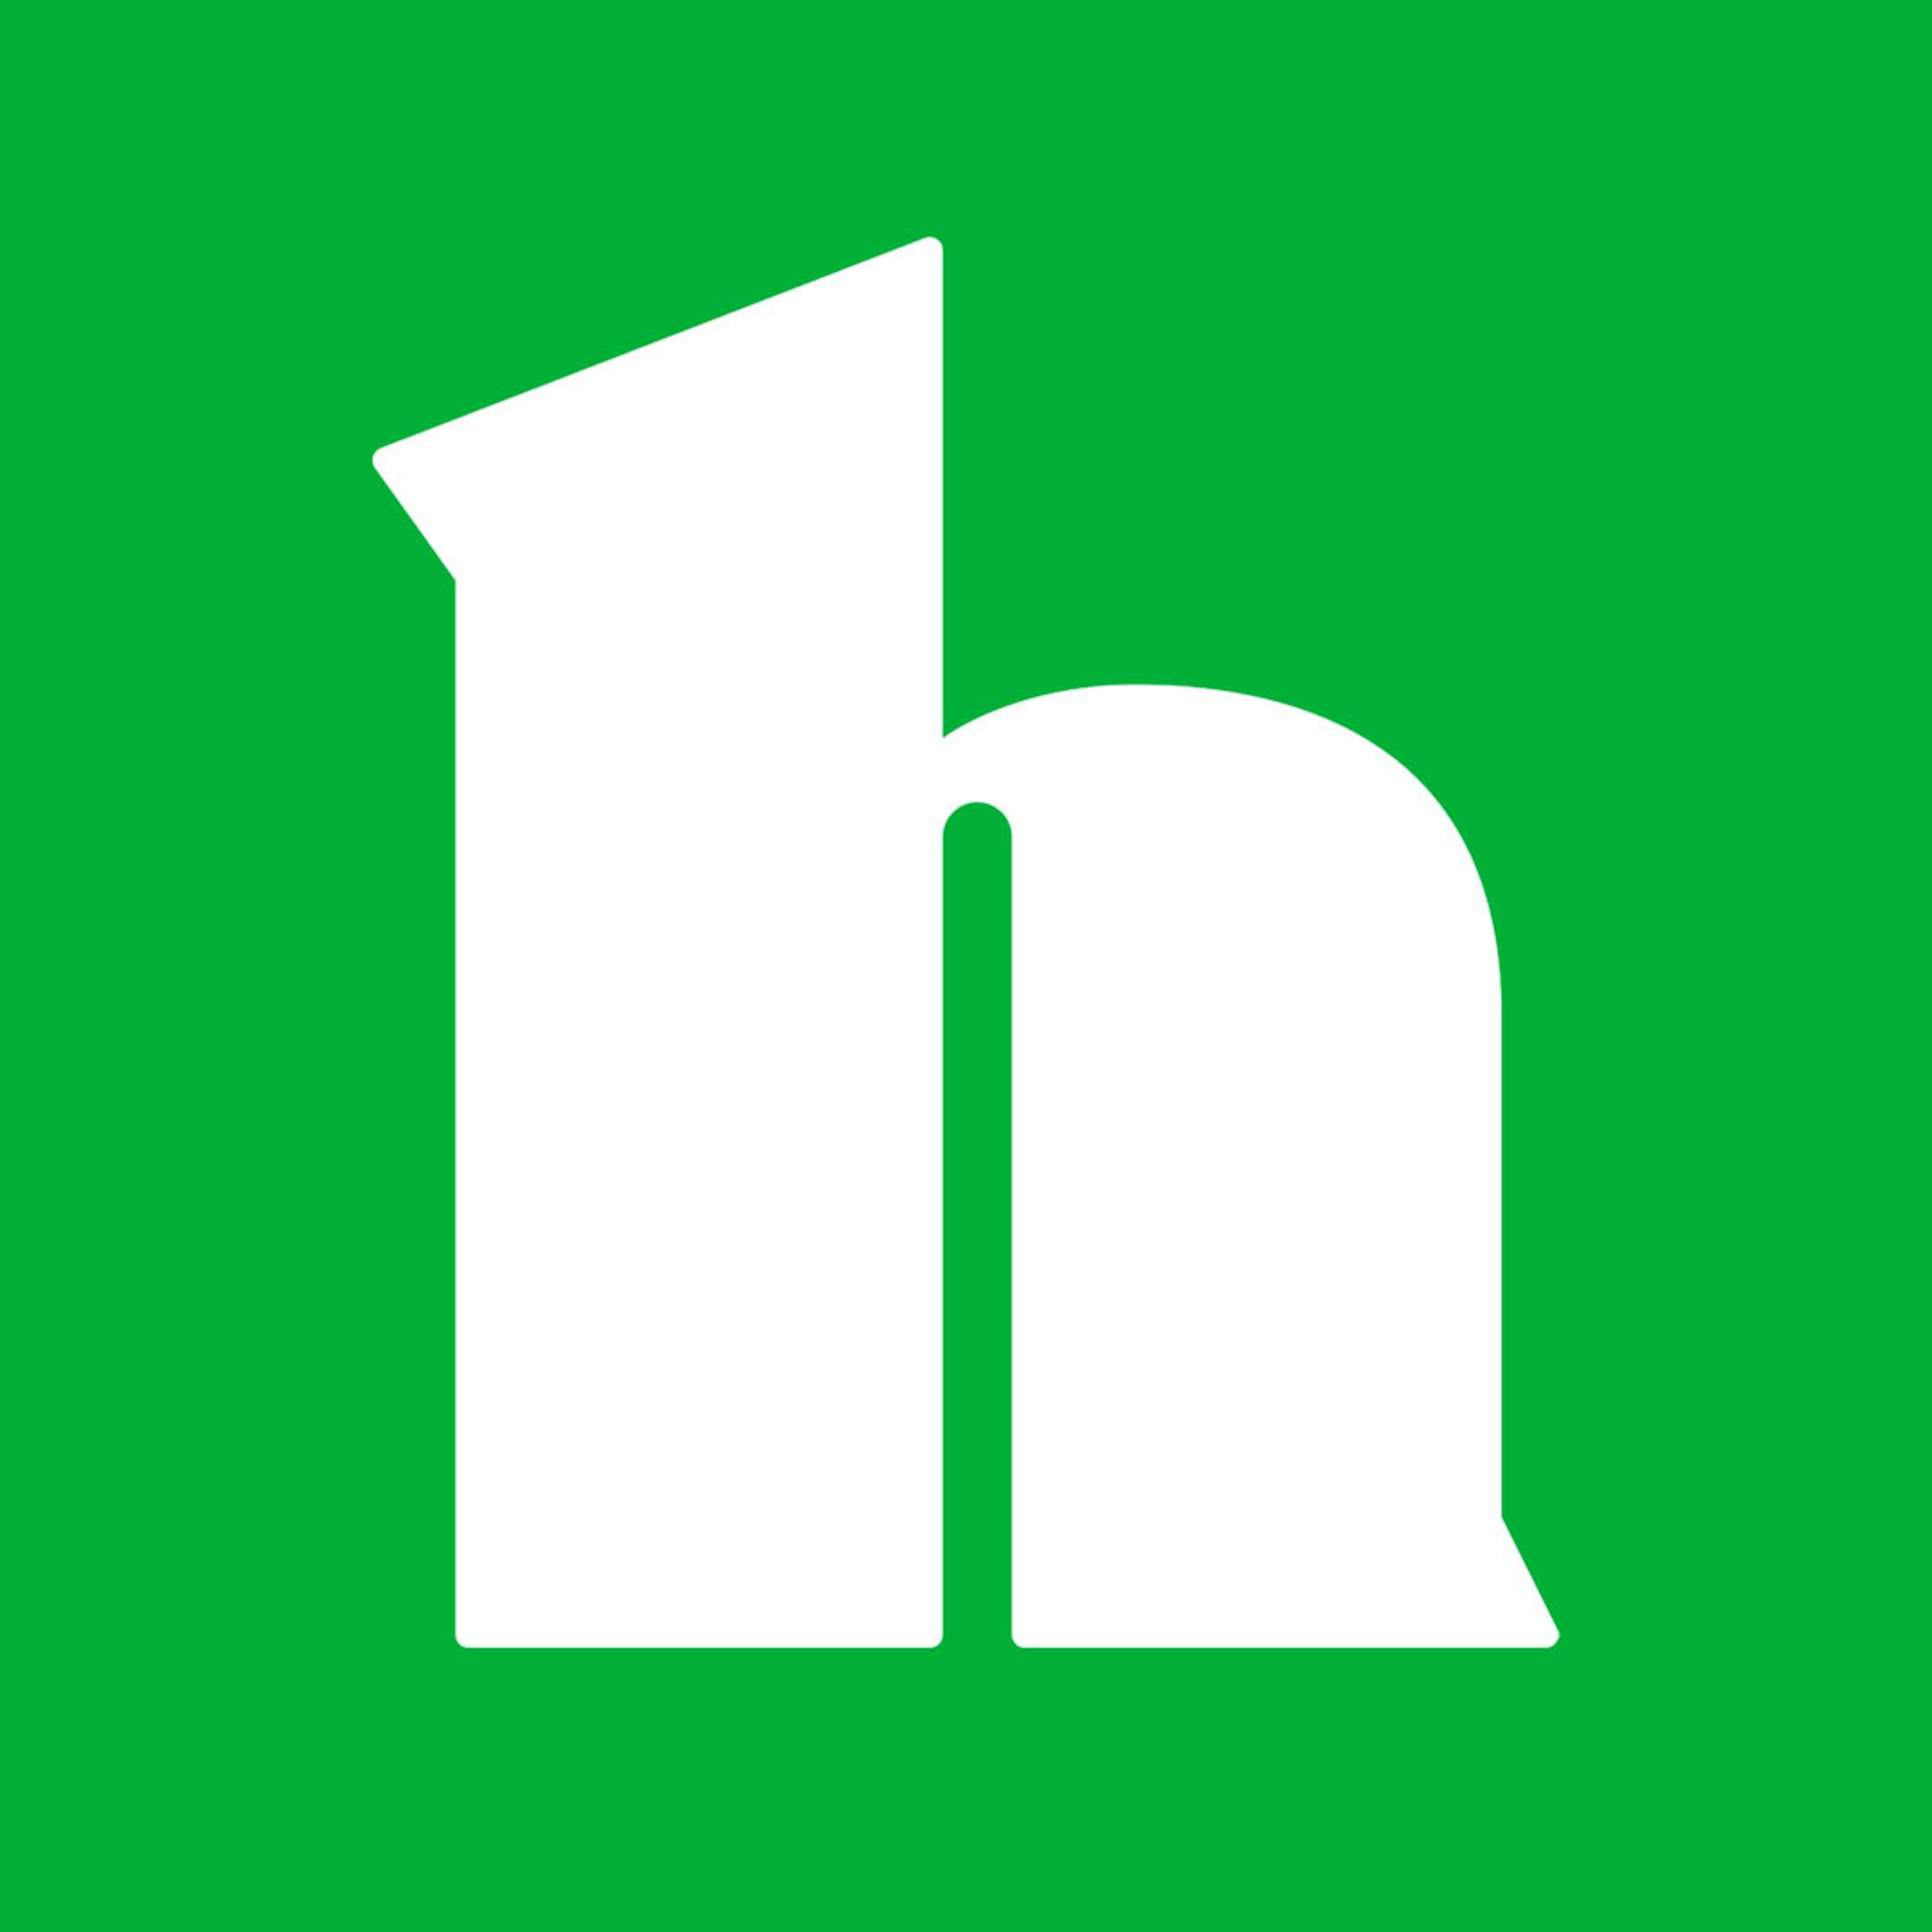 Healthline logo on green background 